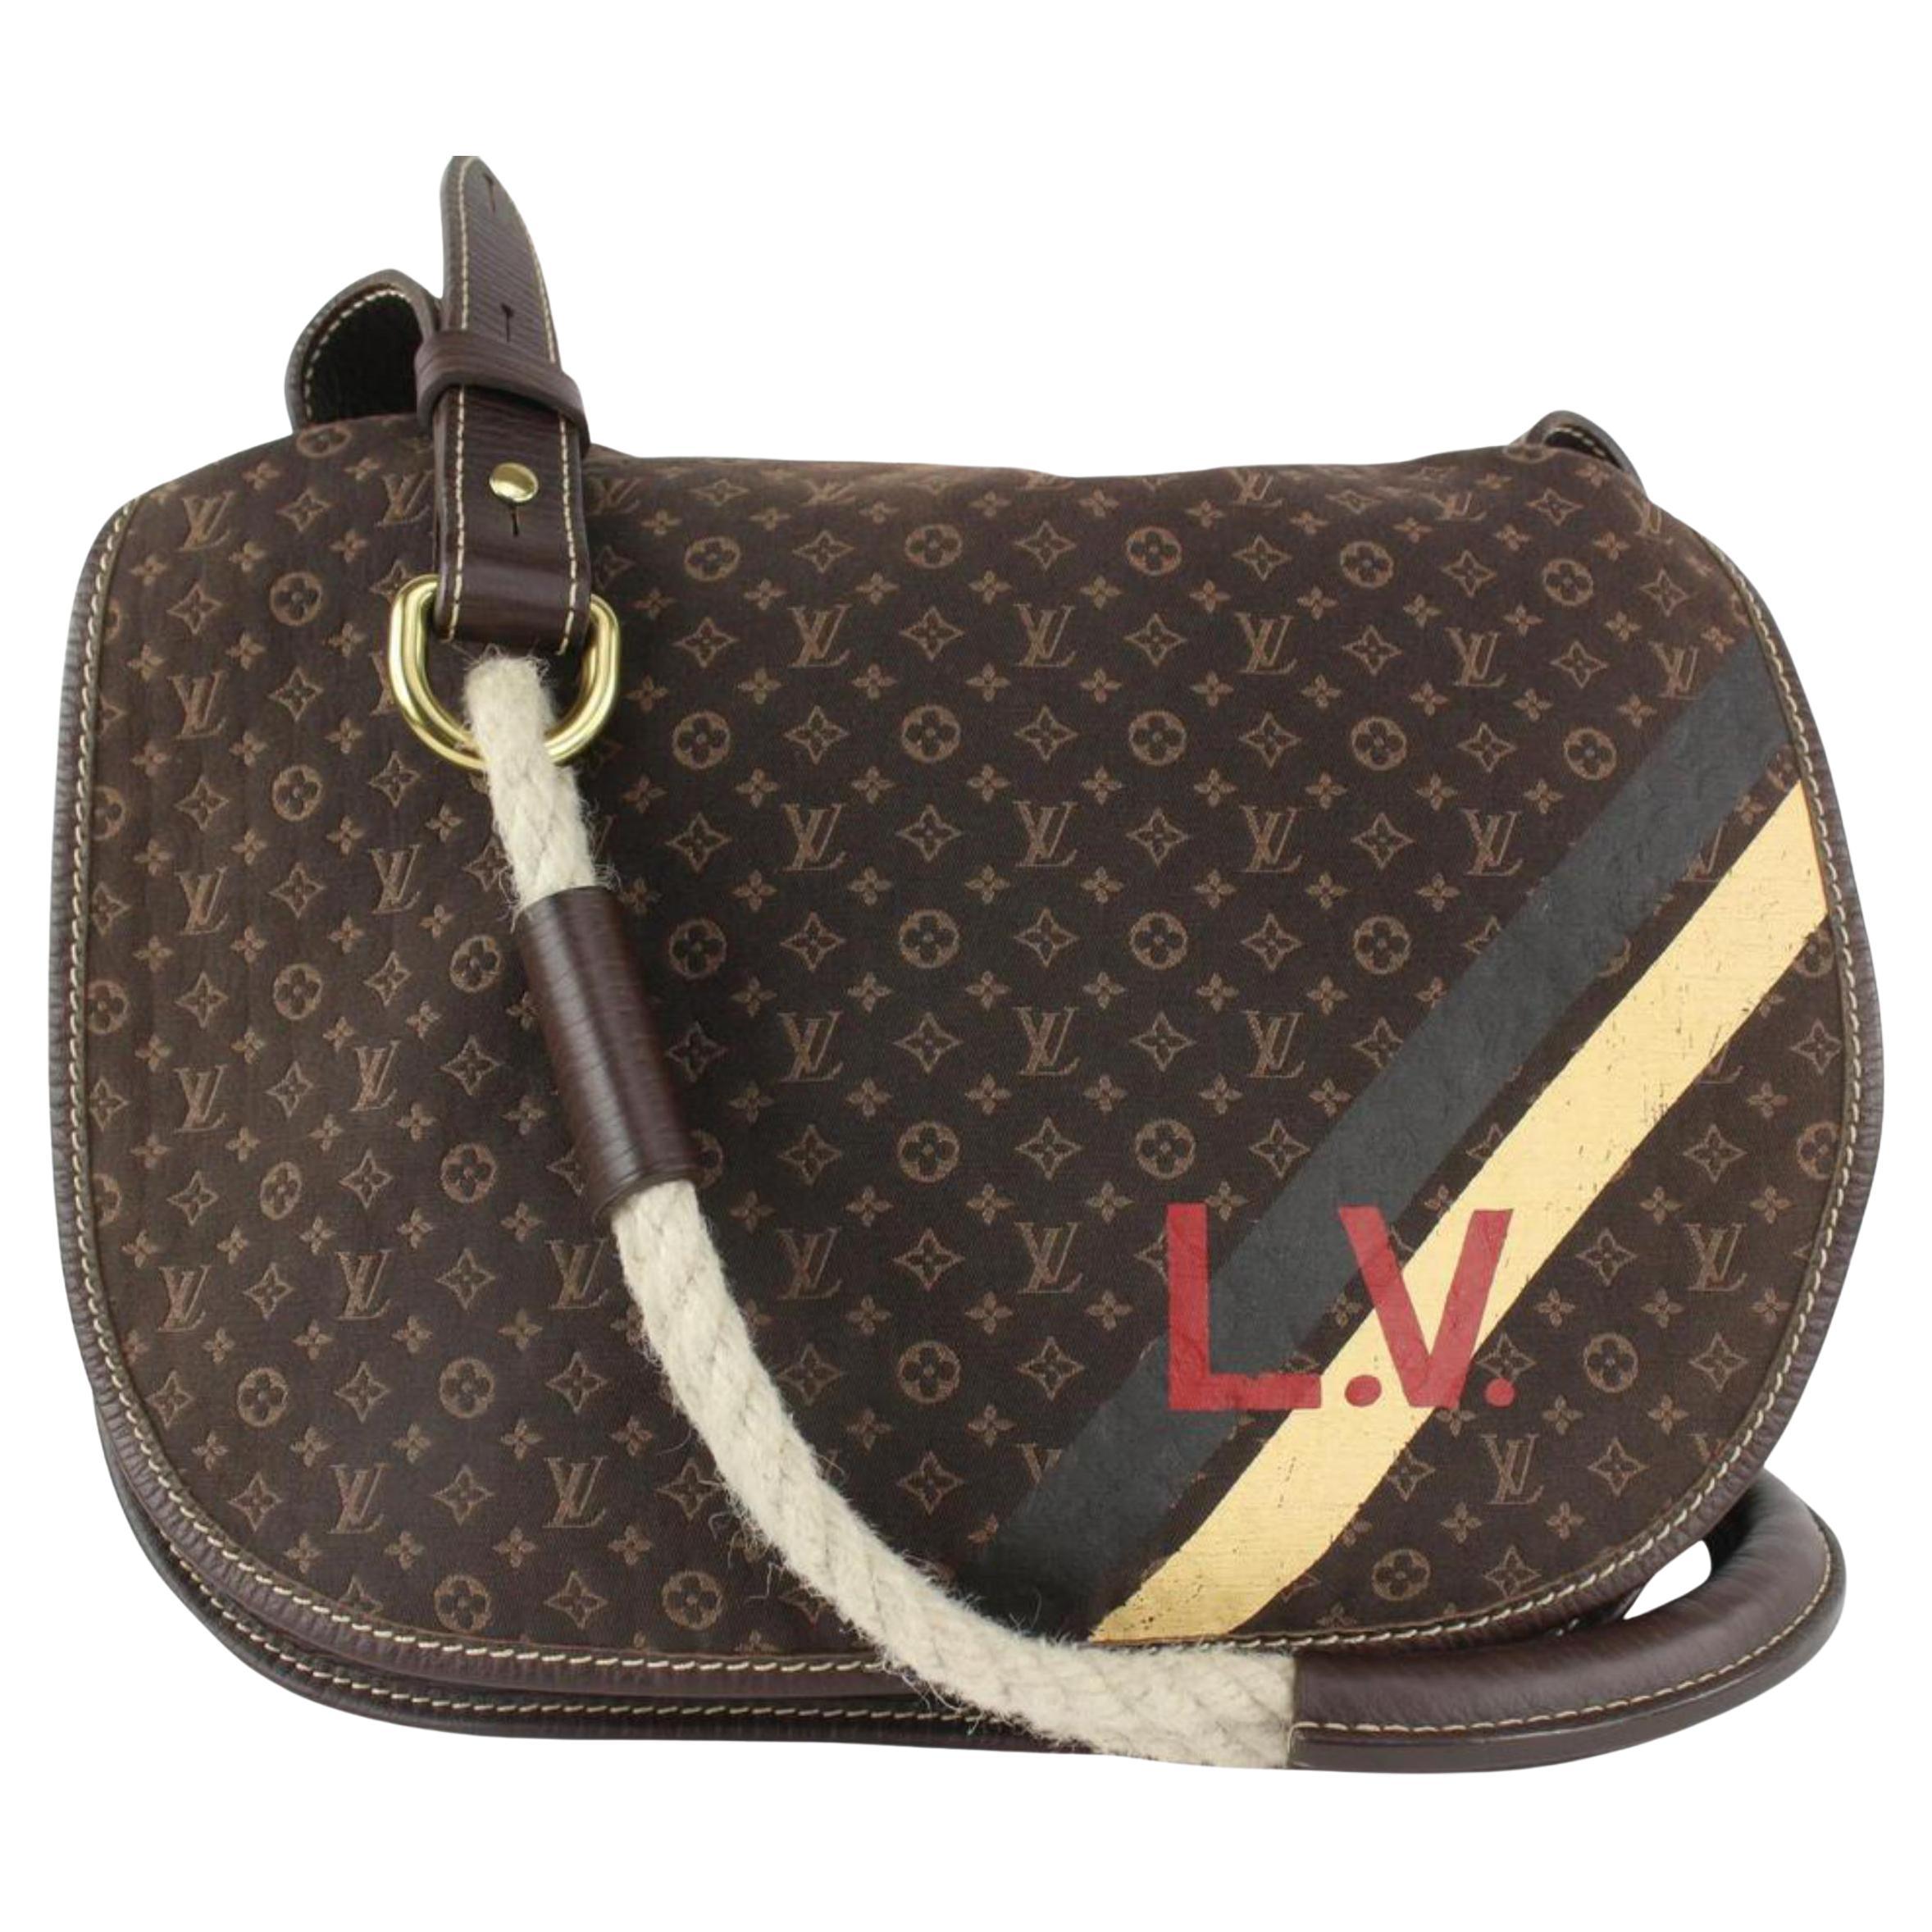 lv initial purse